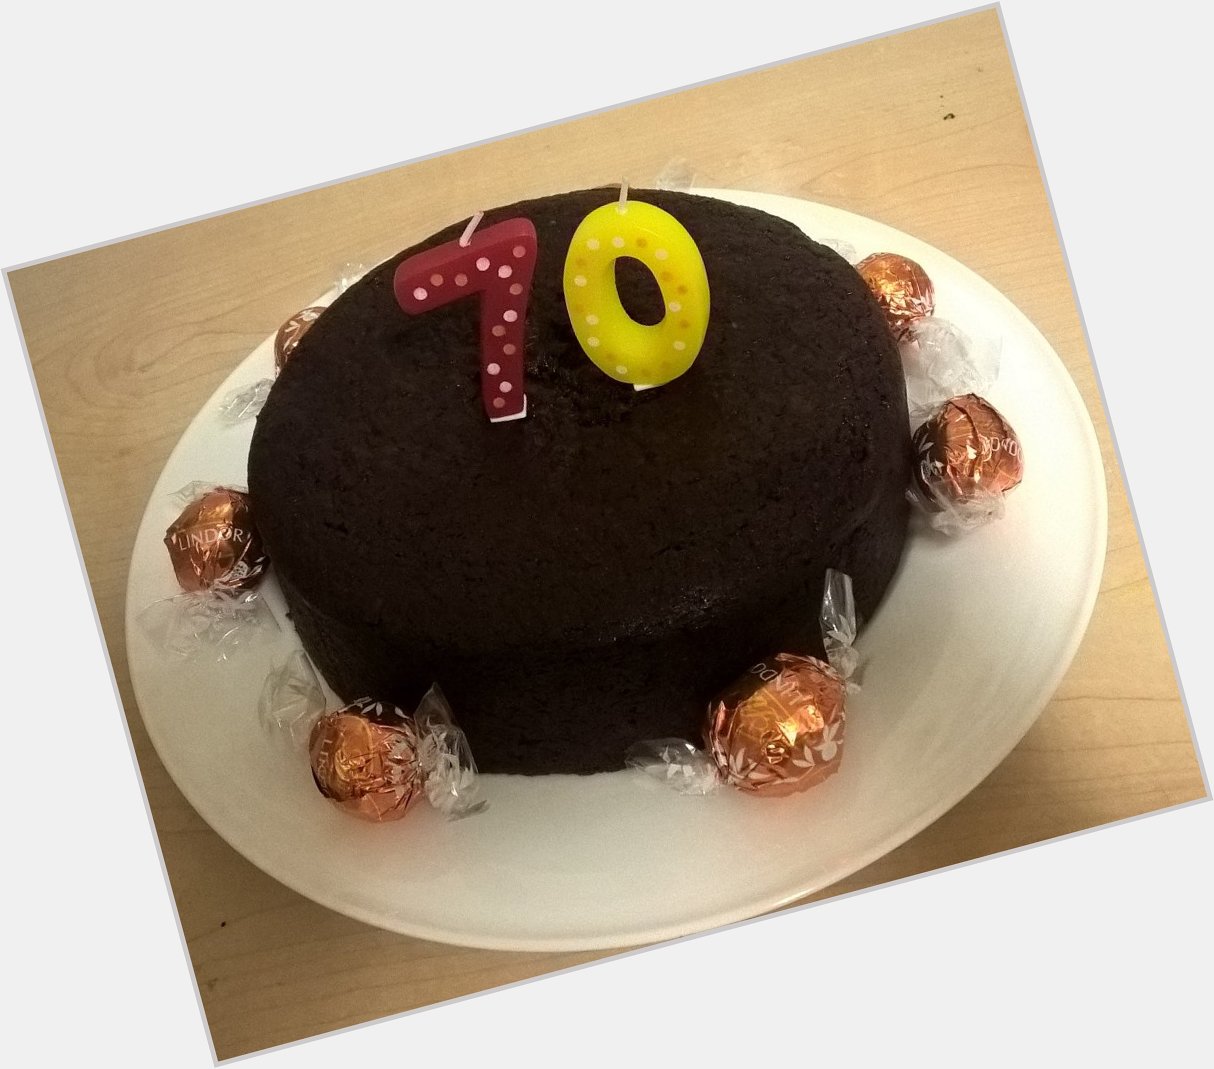 Happy Birthday Mum!
Celebrating with glorious Chocolate Orange Cake. 